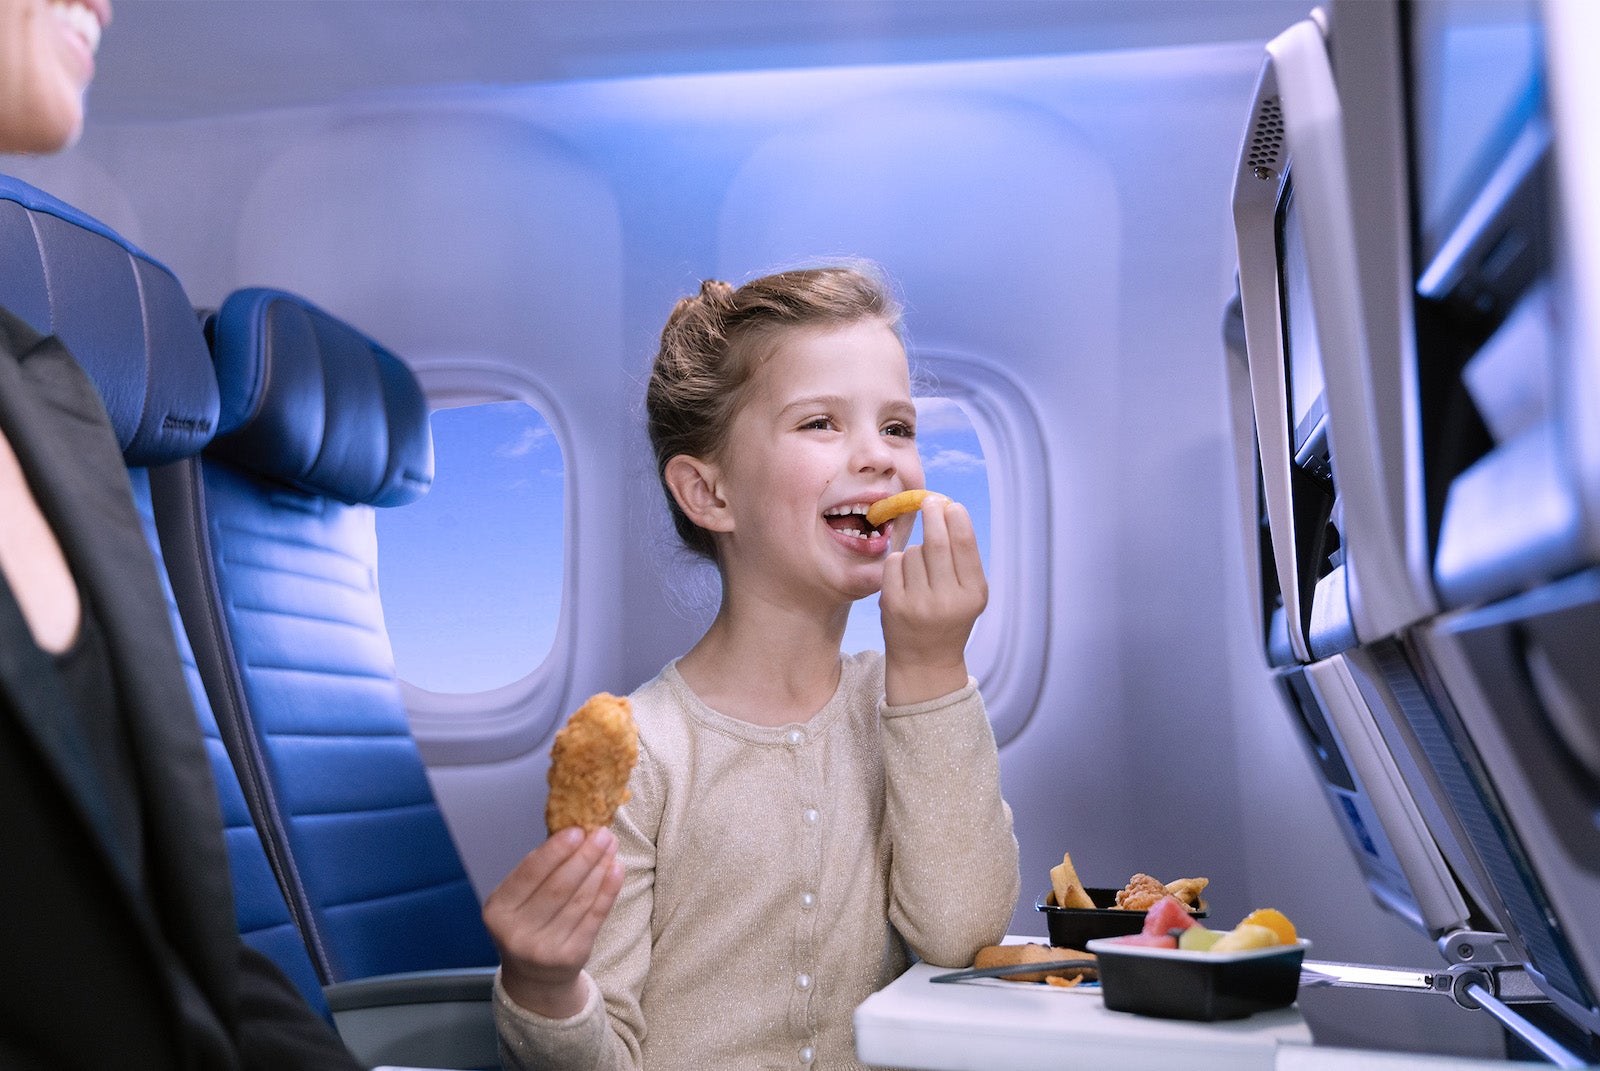 child on plane eating snack